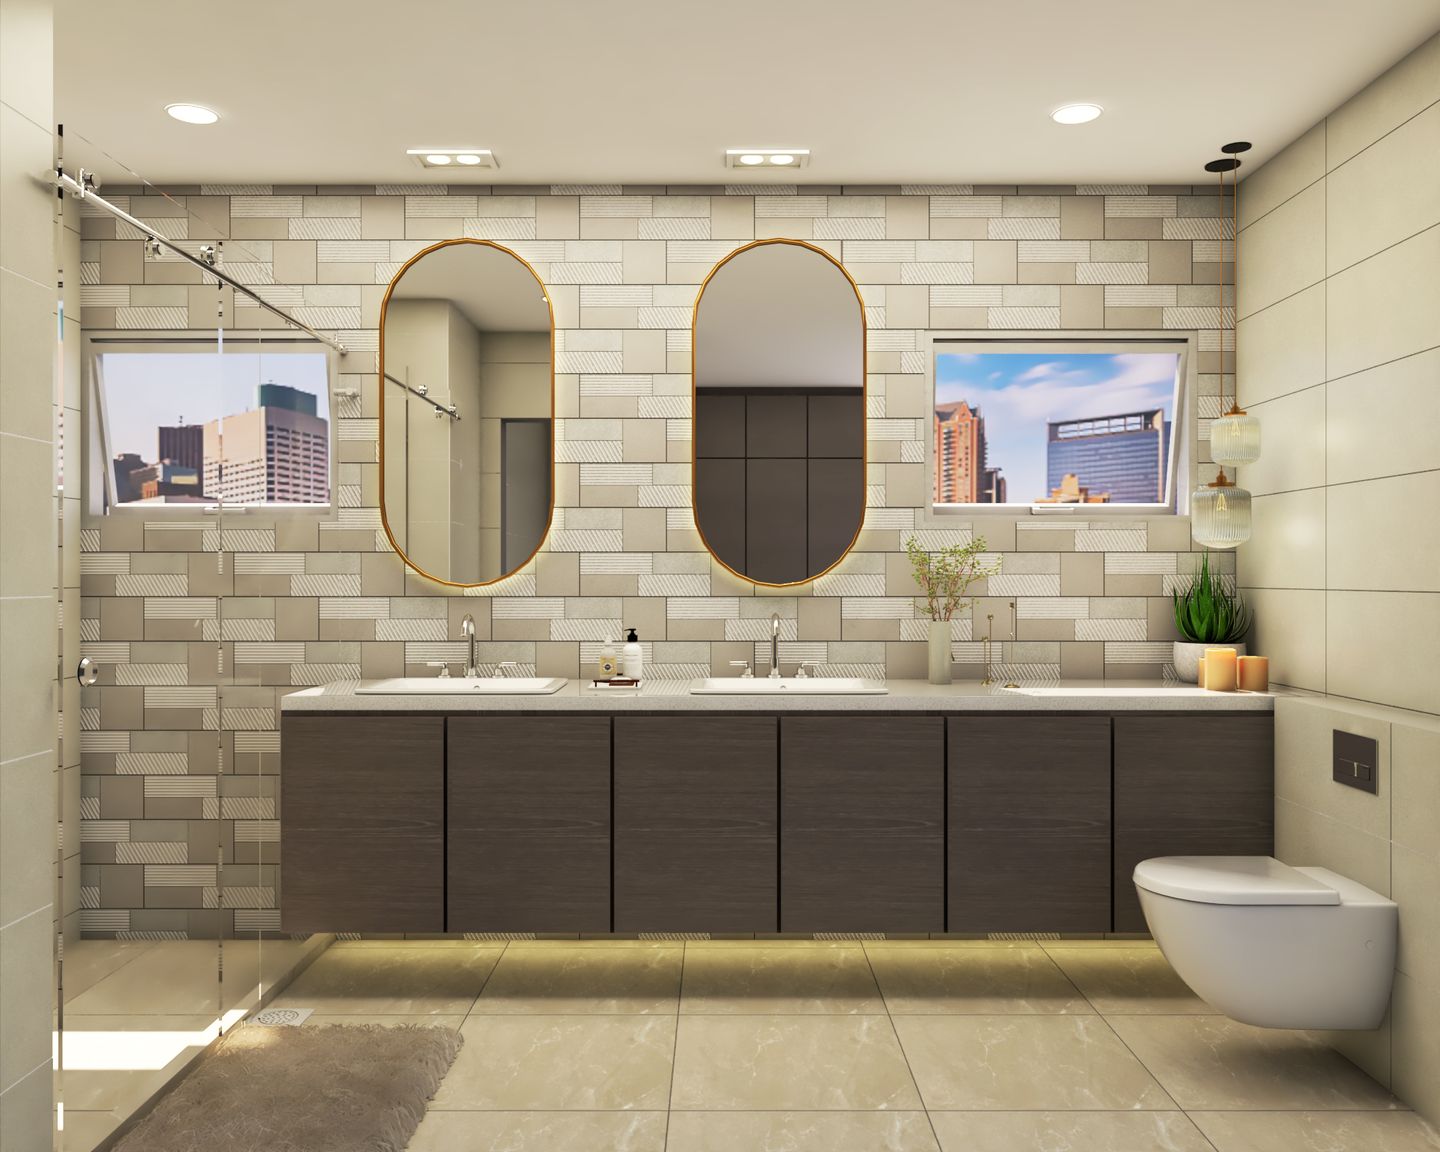 Classic Bathroom Design With Dual Mirrors - Livspace